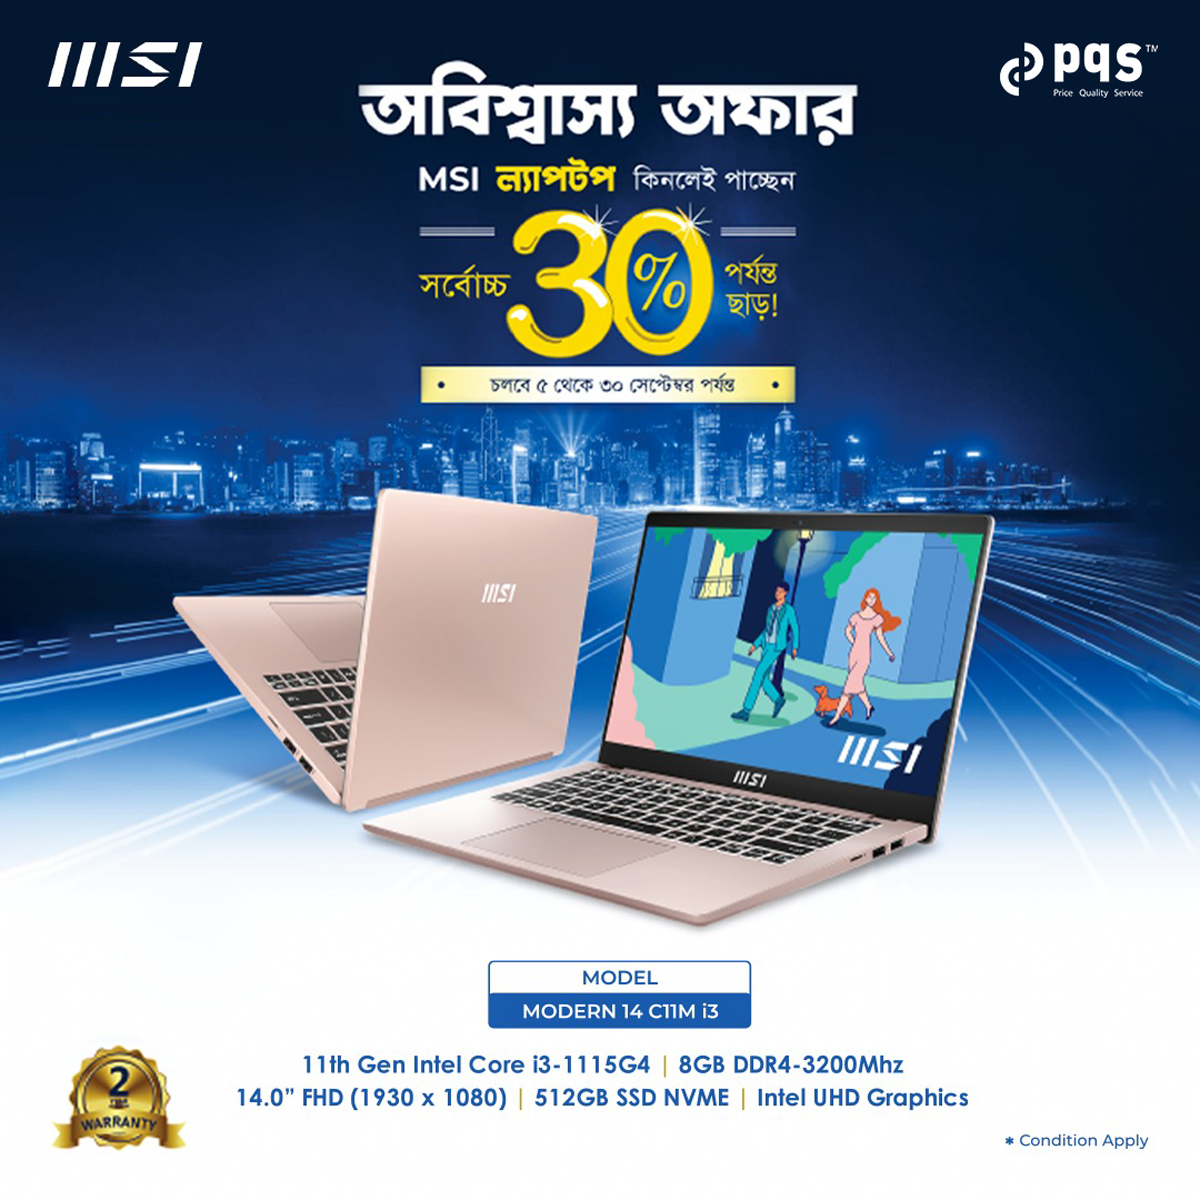 MSI Laptop Offer